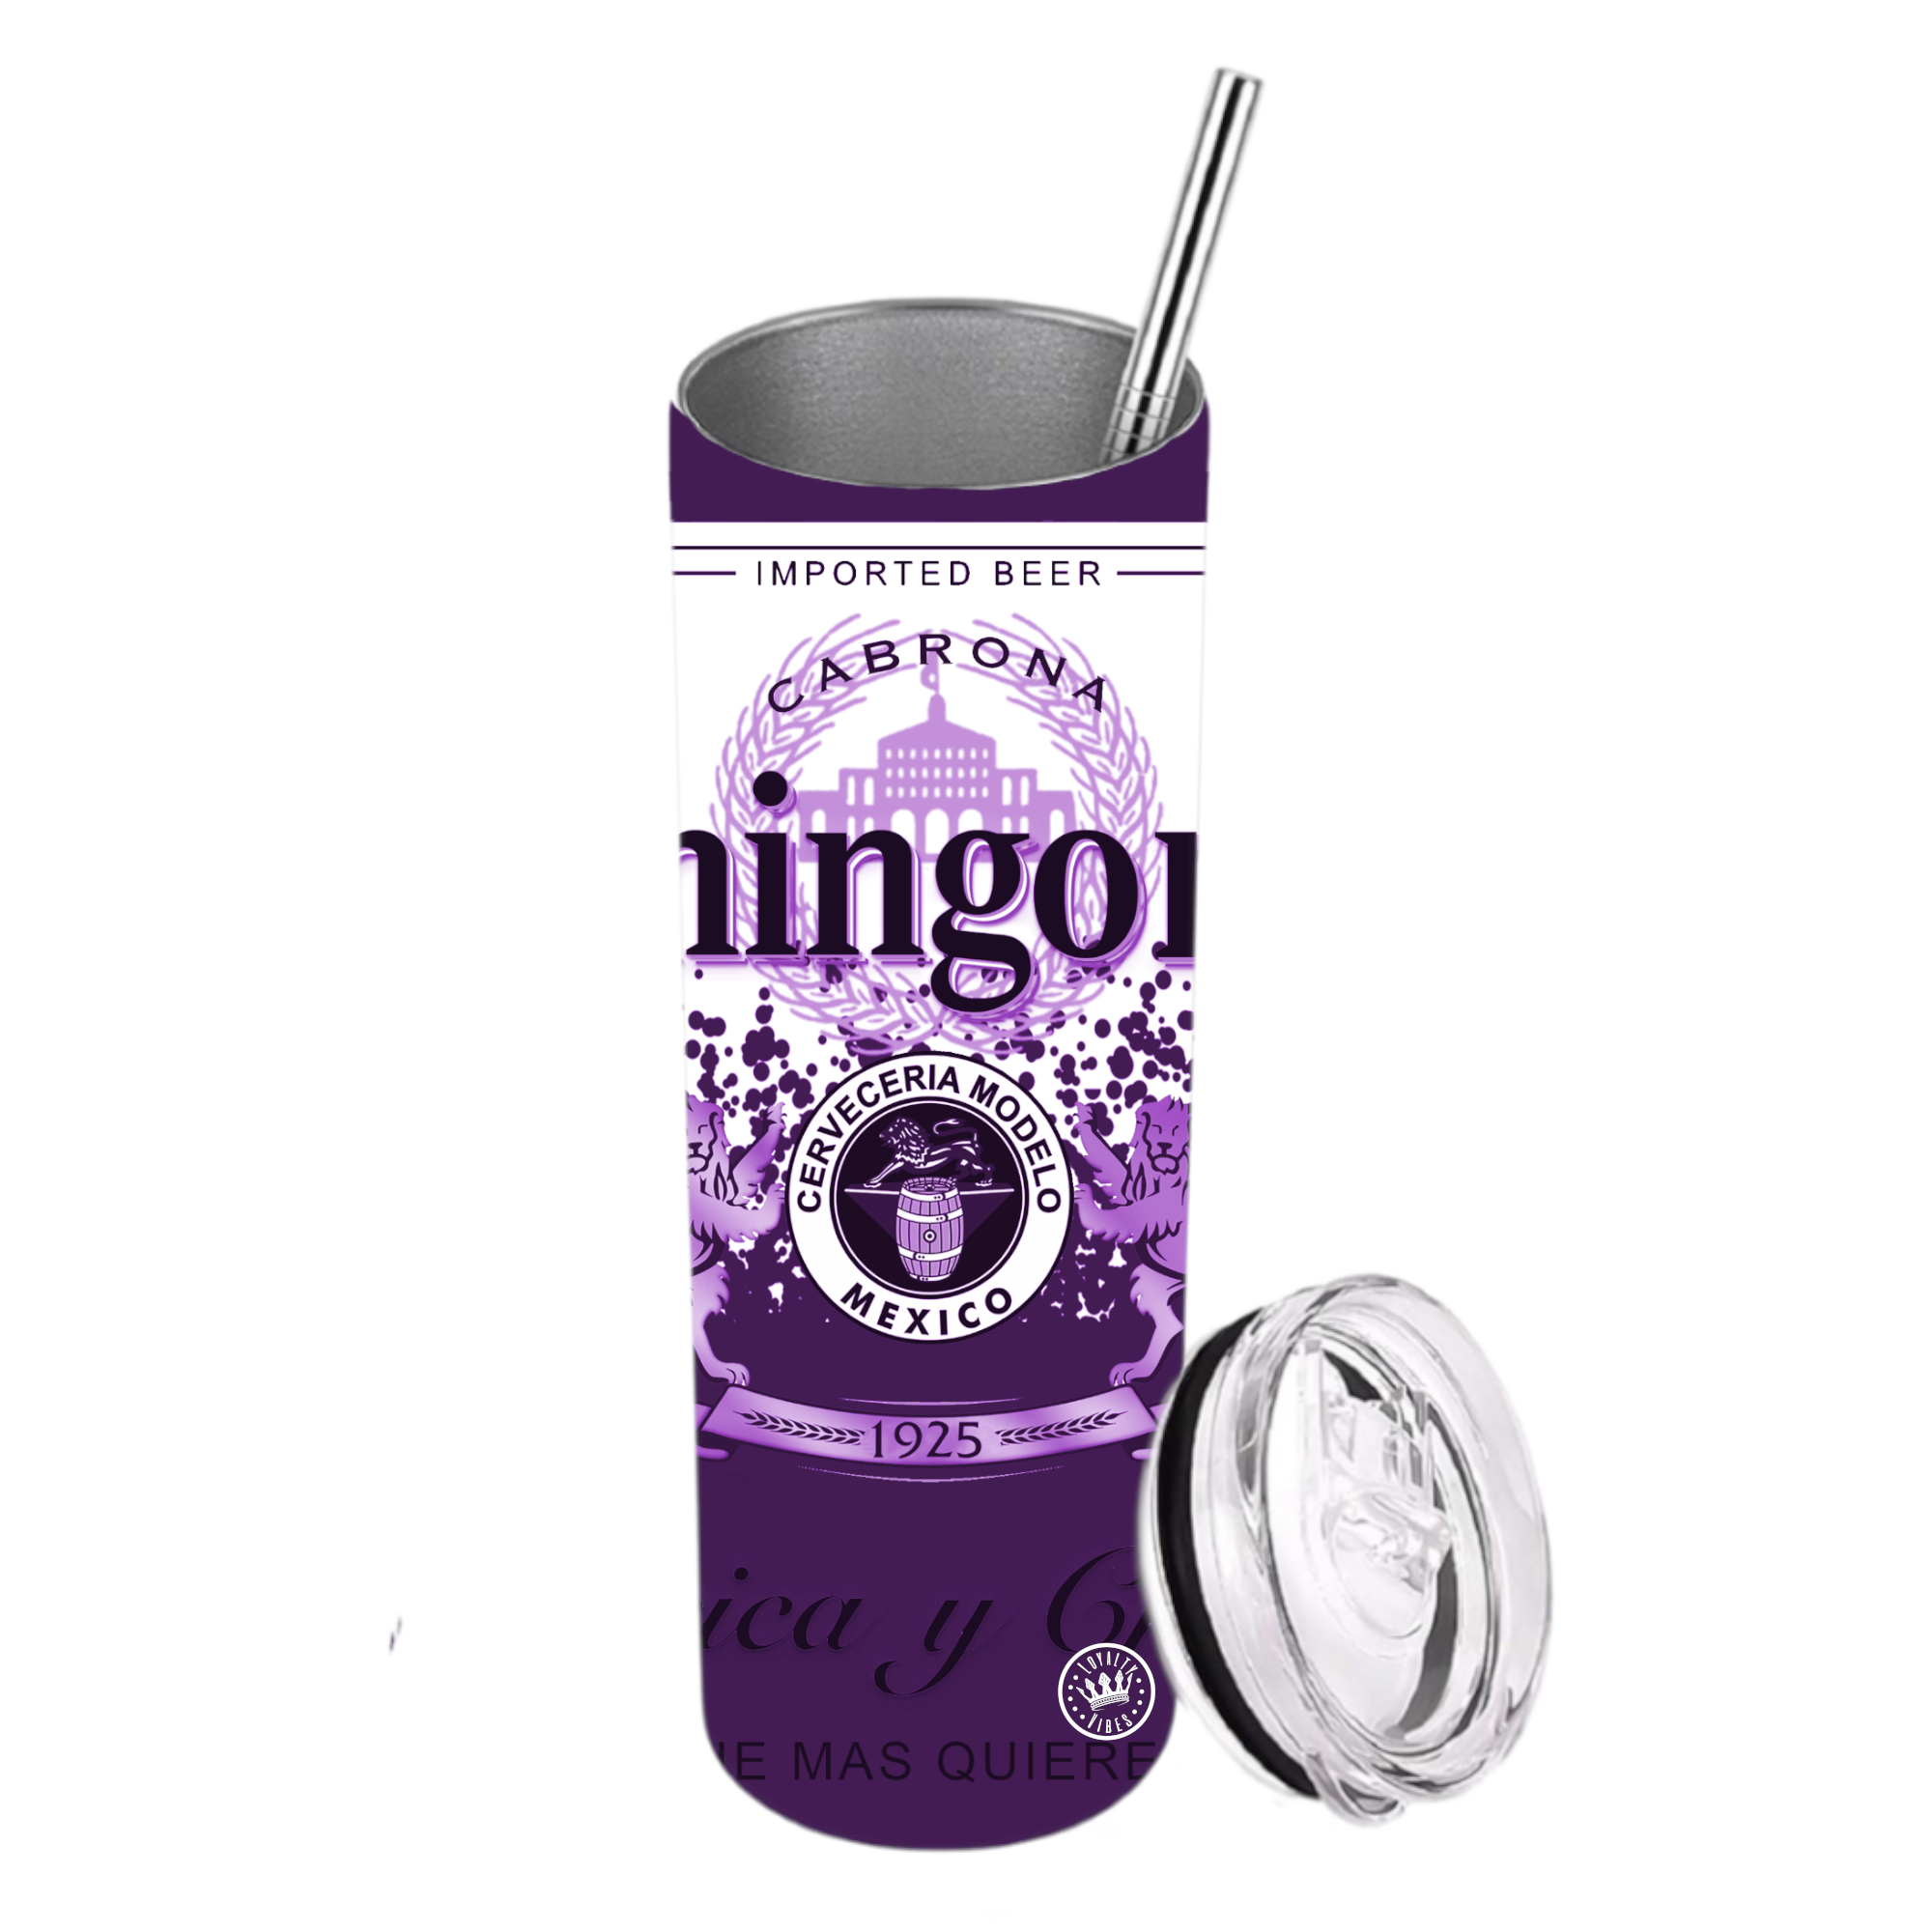 Chingona Tumbler Purple Passion - Loyalty Vibes